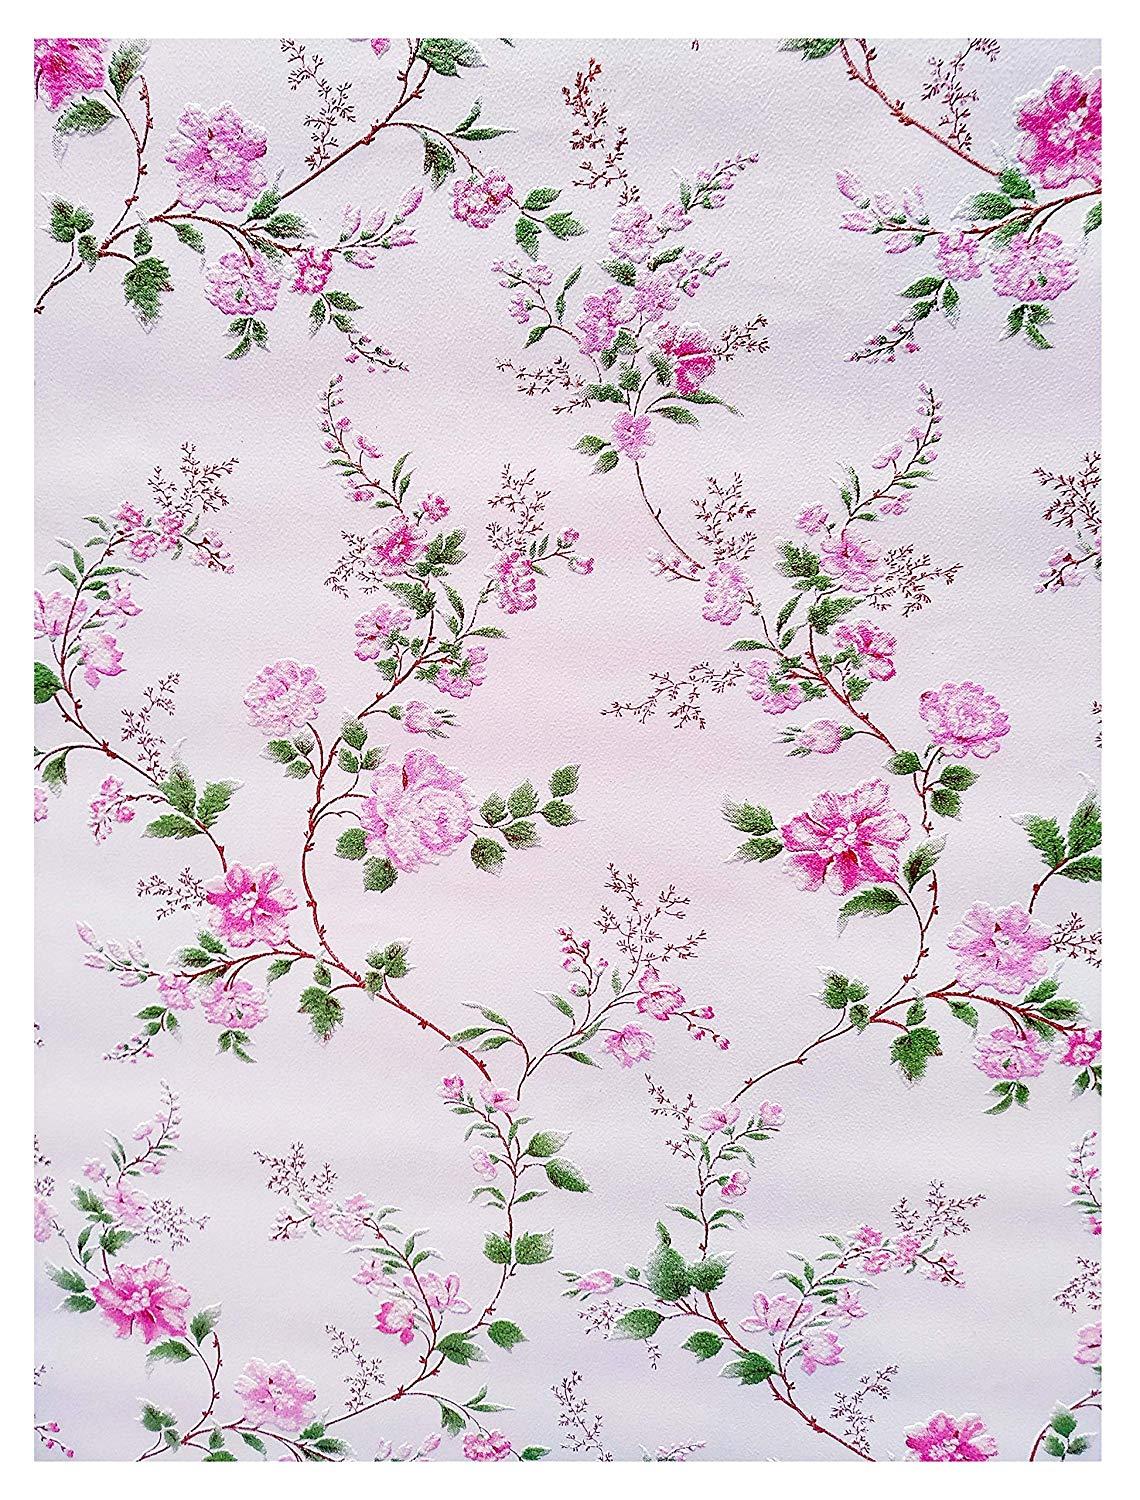 Texoplast Multicolor Heritage Floral Wallpaper Rose Pink, 57 sq